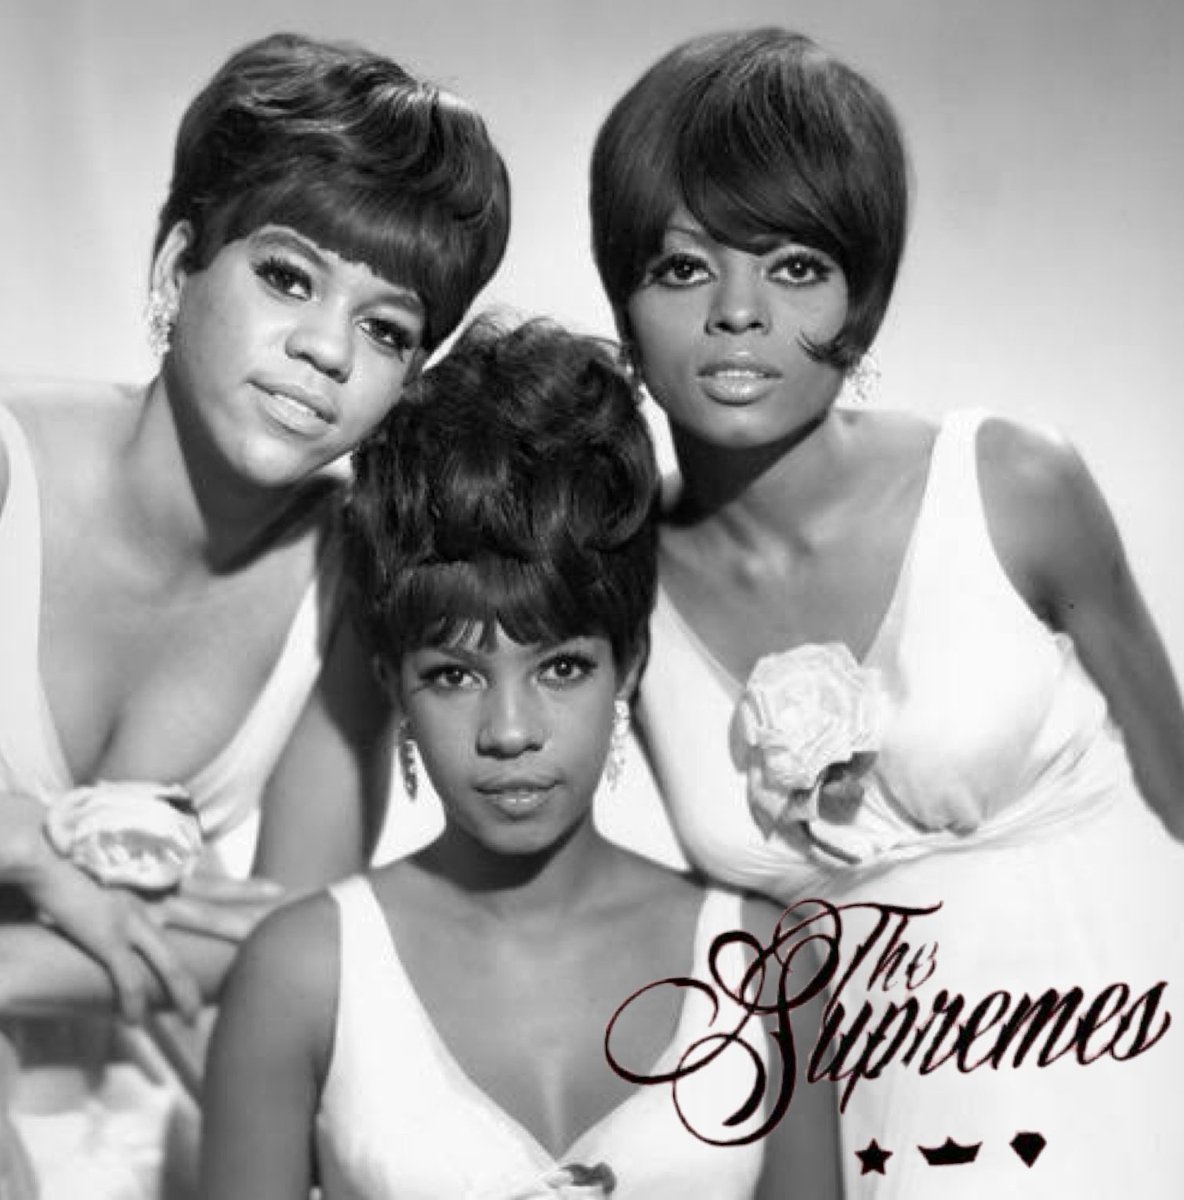 The Supremes を聴いています。
女性3人組のR&Bグループ。
前身のThe Primettesのときは4人組だったそう。
ダイアナ ロスがいた事で有名。
スプリームス(ズ)なのか、シュープリームス(ズ)なのか？^_^
#rockbarsid #rockbar #thesupremes #dianaross #randb #motown #soulmusic #popsoul #usa